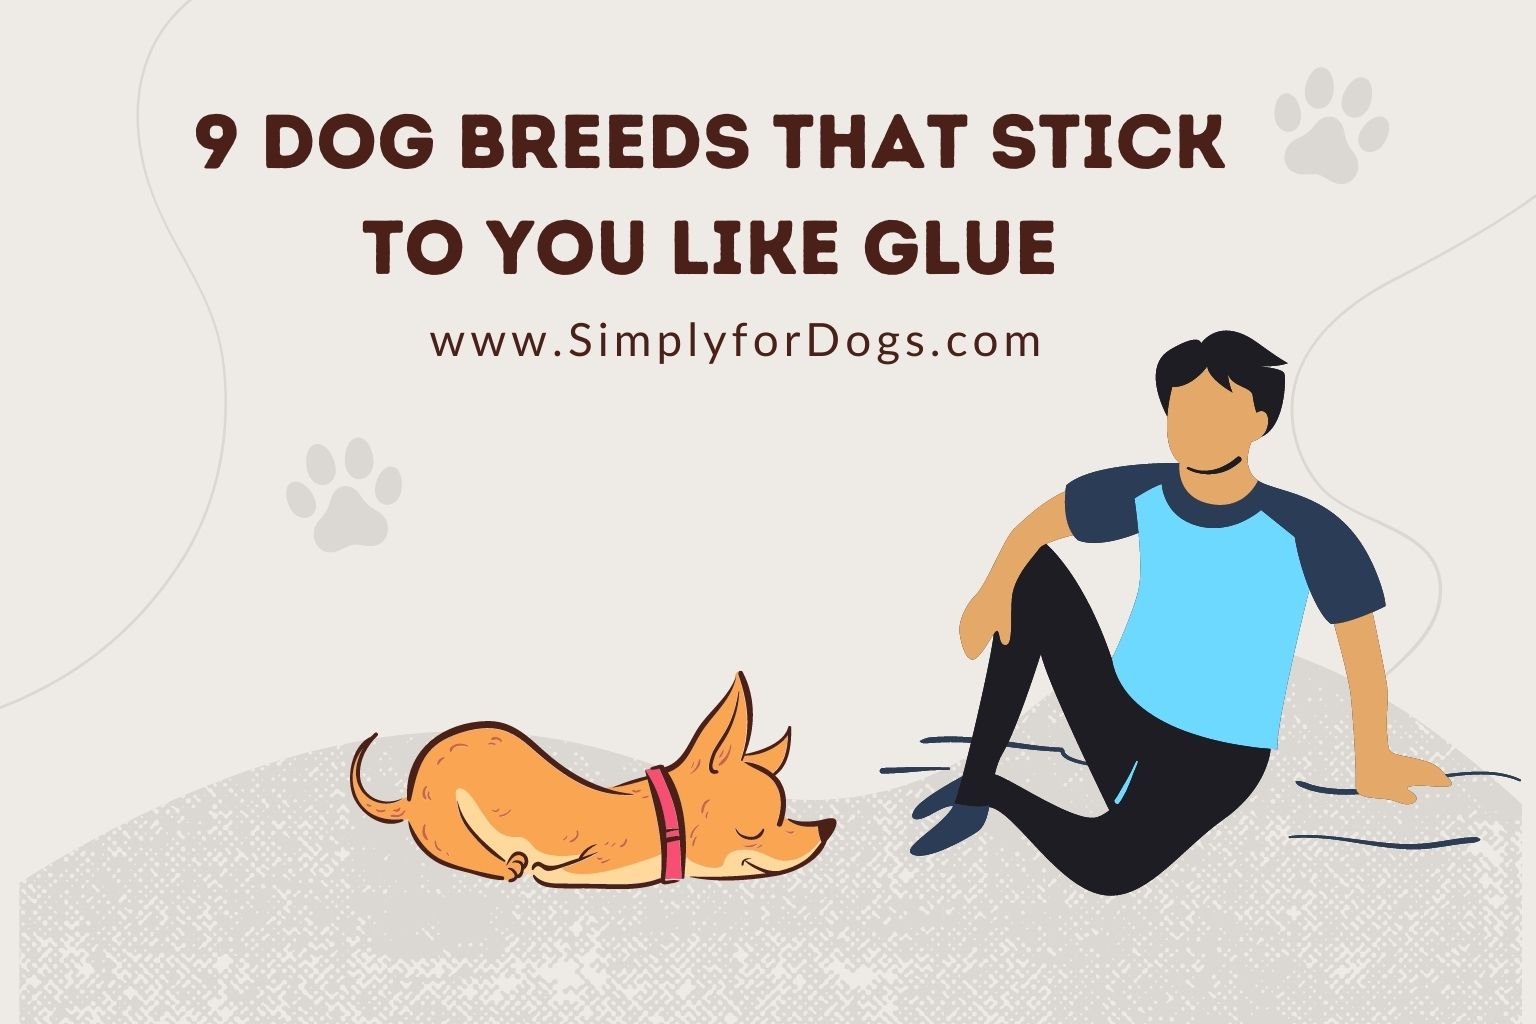 9 Dog Breeds That Stick to You Like Glue